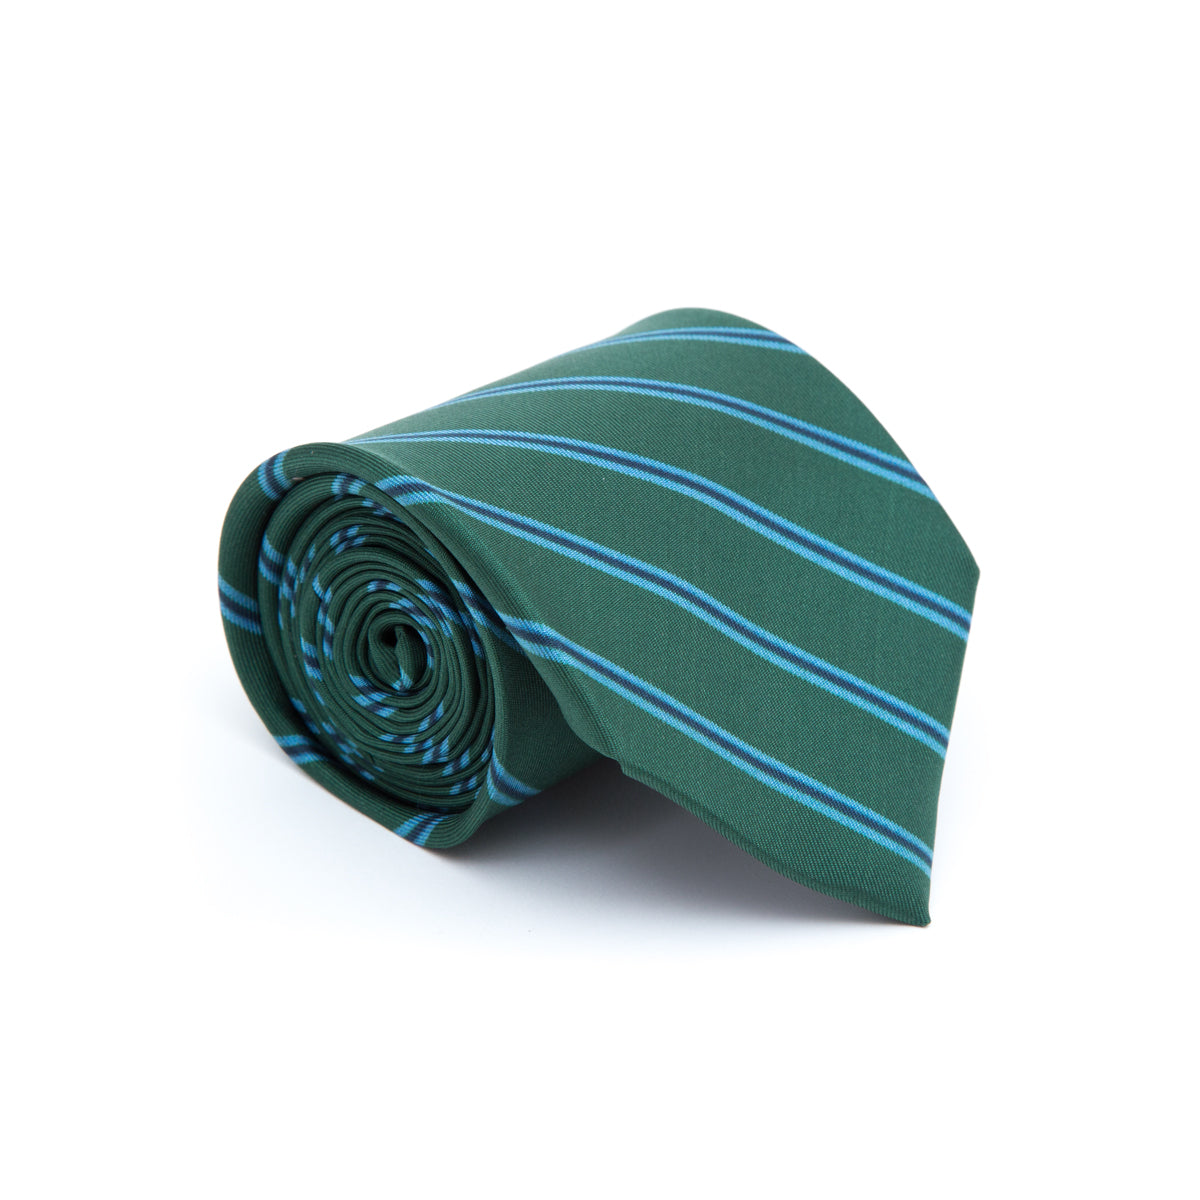 Pine green striped tie